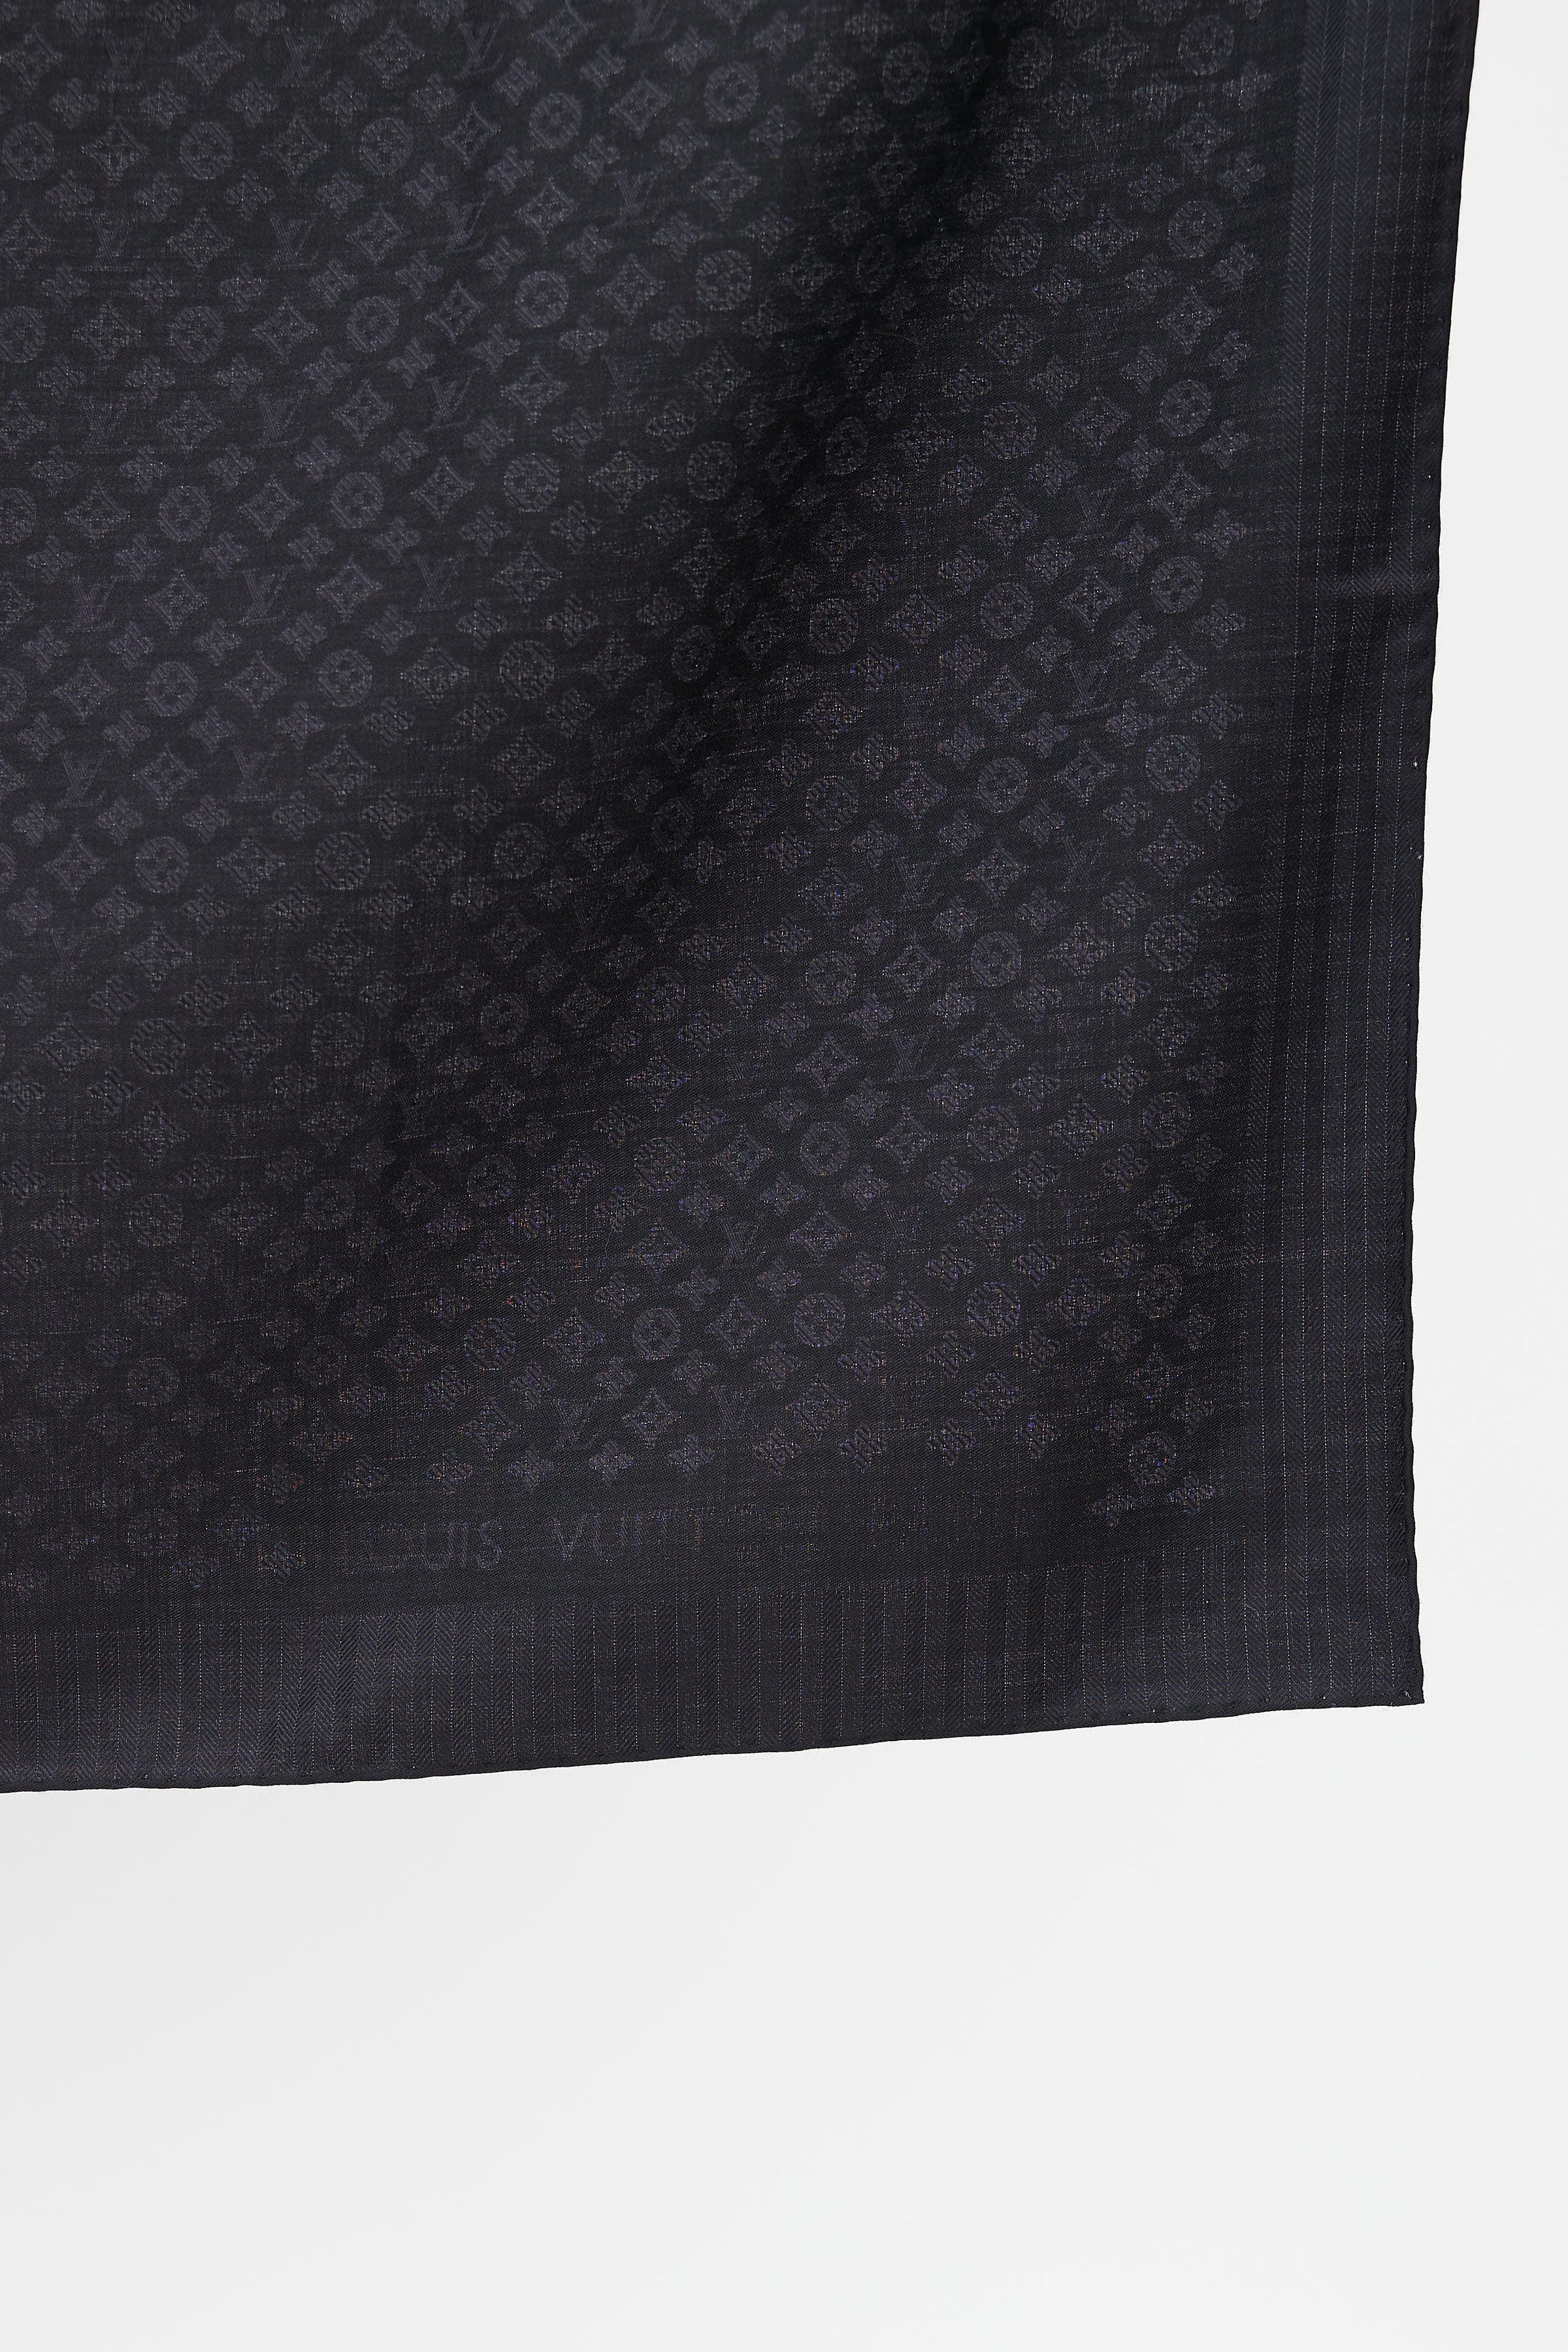 Louis Vuitton Evermore Shawl Black Silk